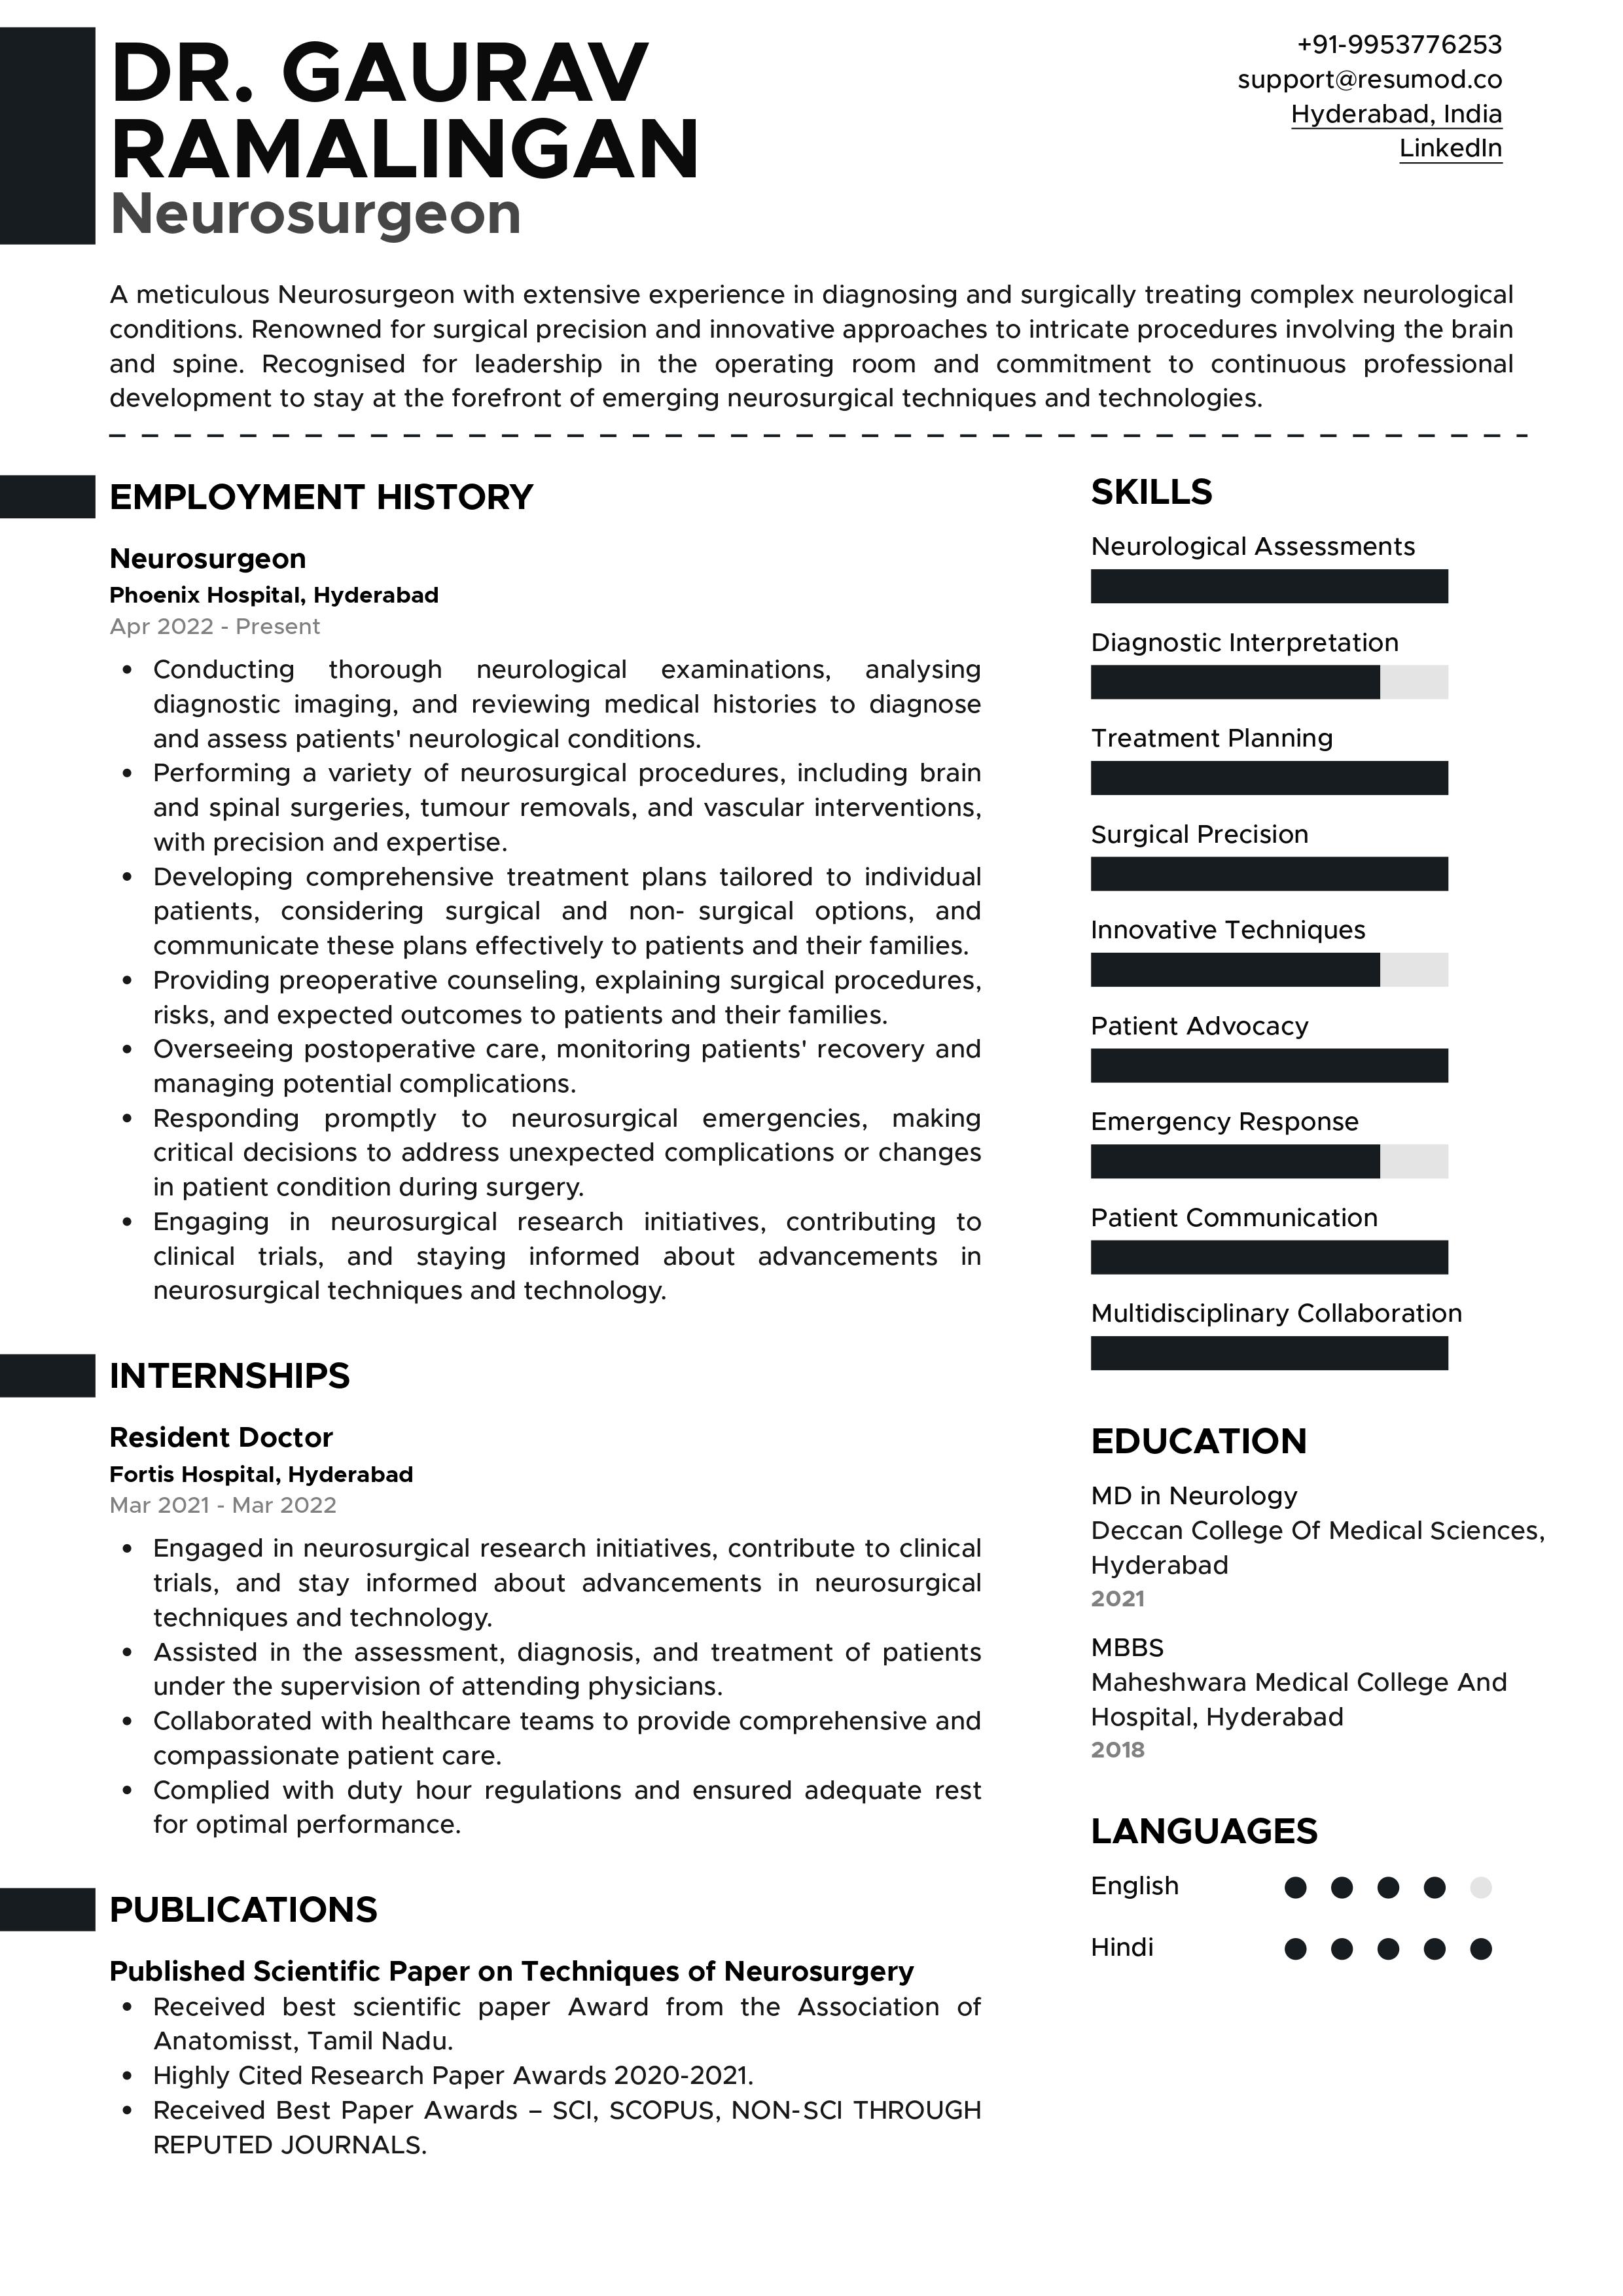 Sample Resume of Neurosurgeon | Free Resume Templates & Samples on Resumod.co